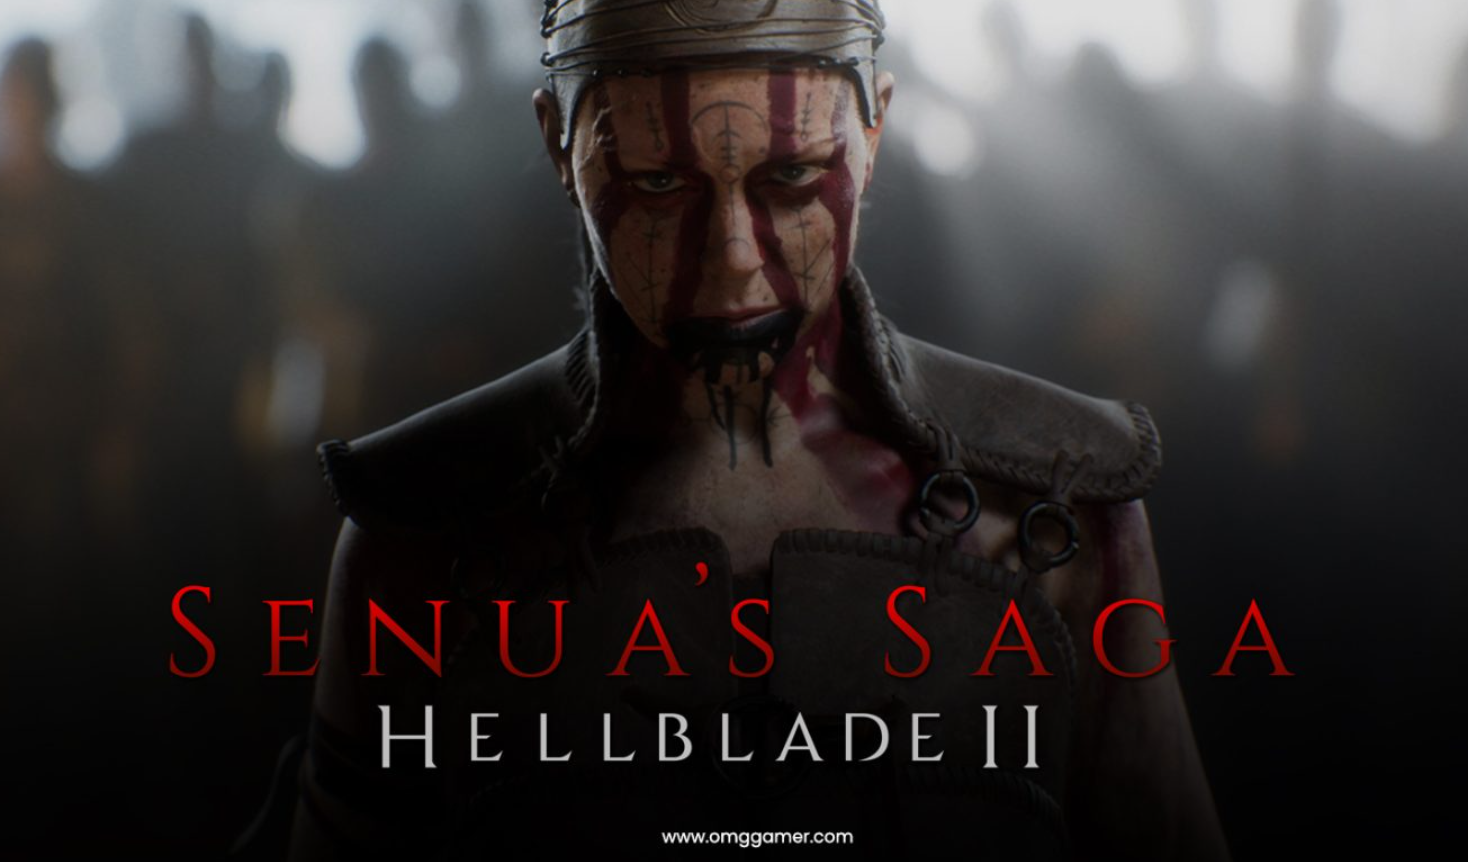 Release Date Announced for Senua's Saga Hellblade 2